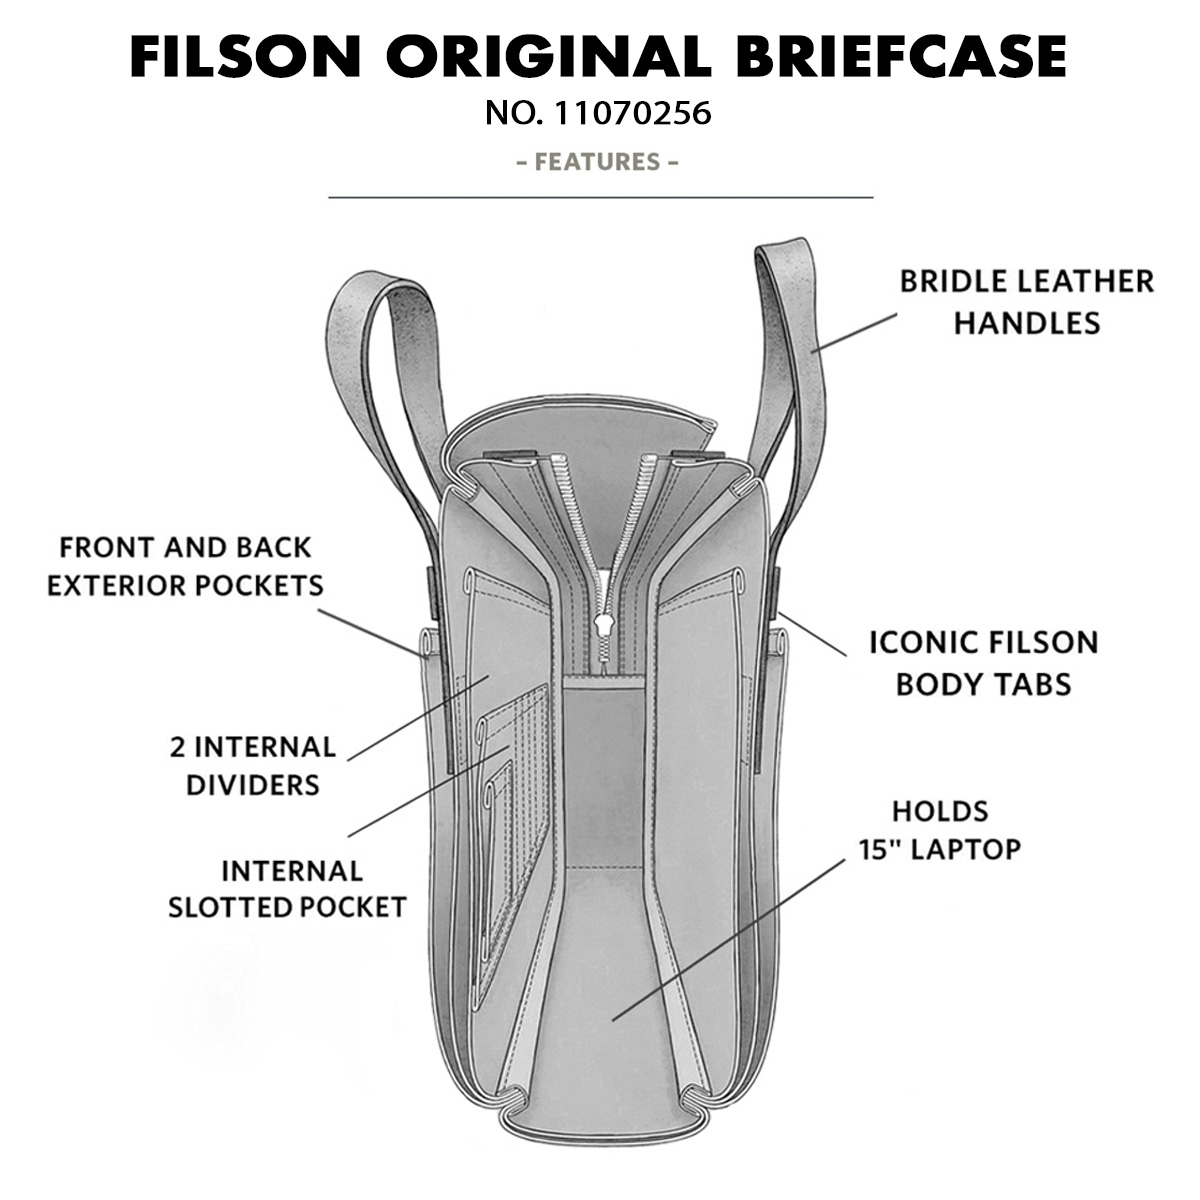 Filson Original Briefcase 11070256 Cinder, features